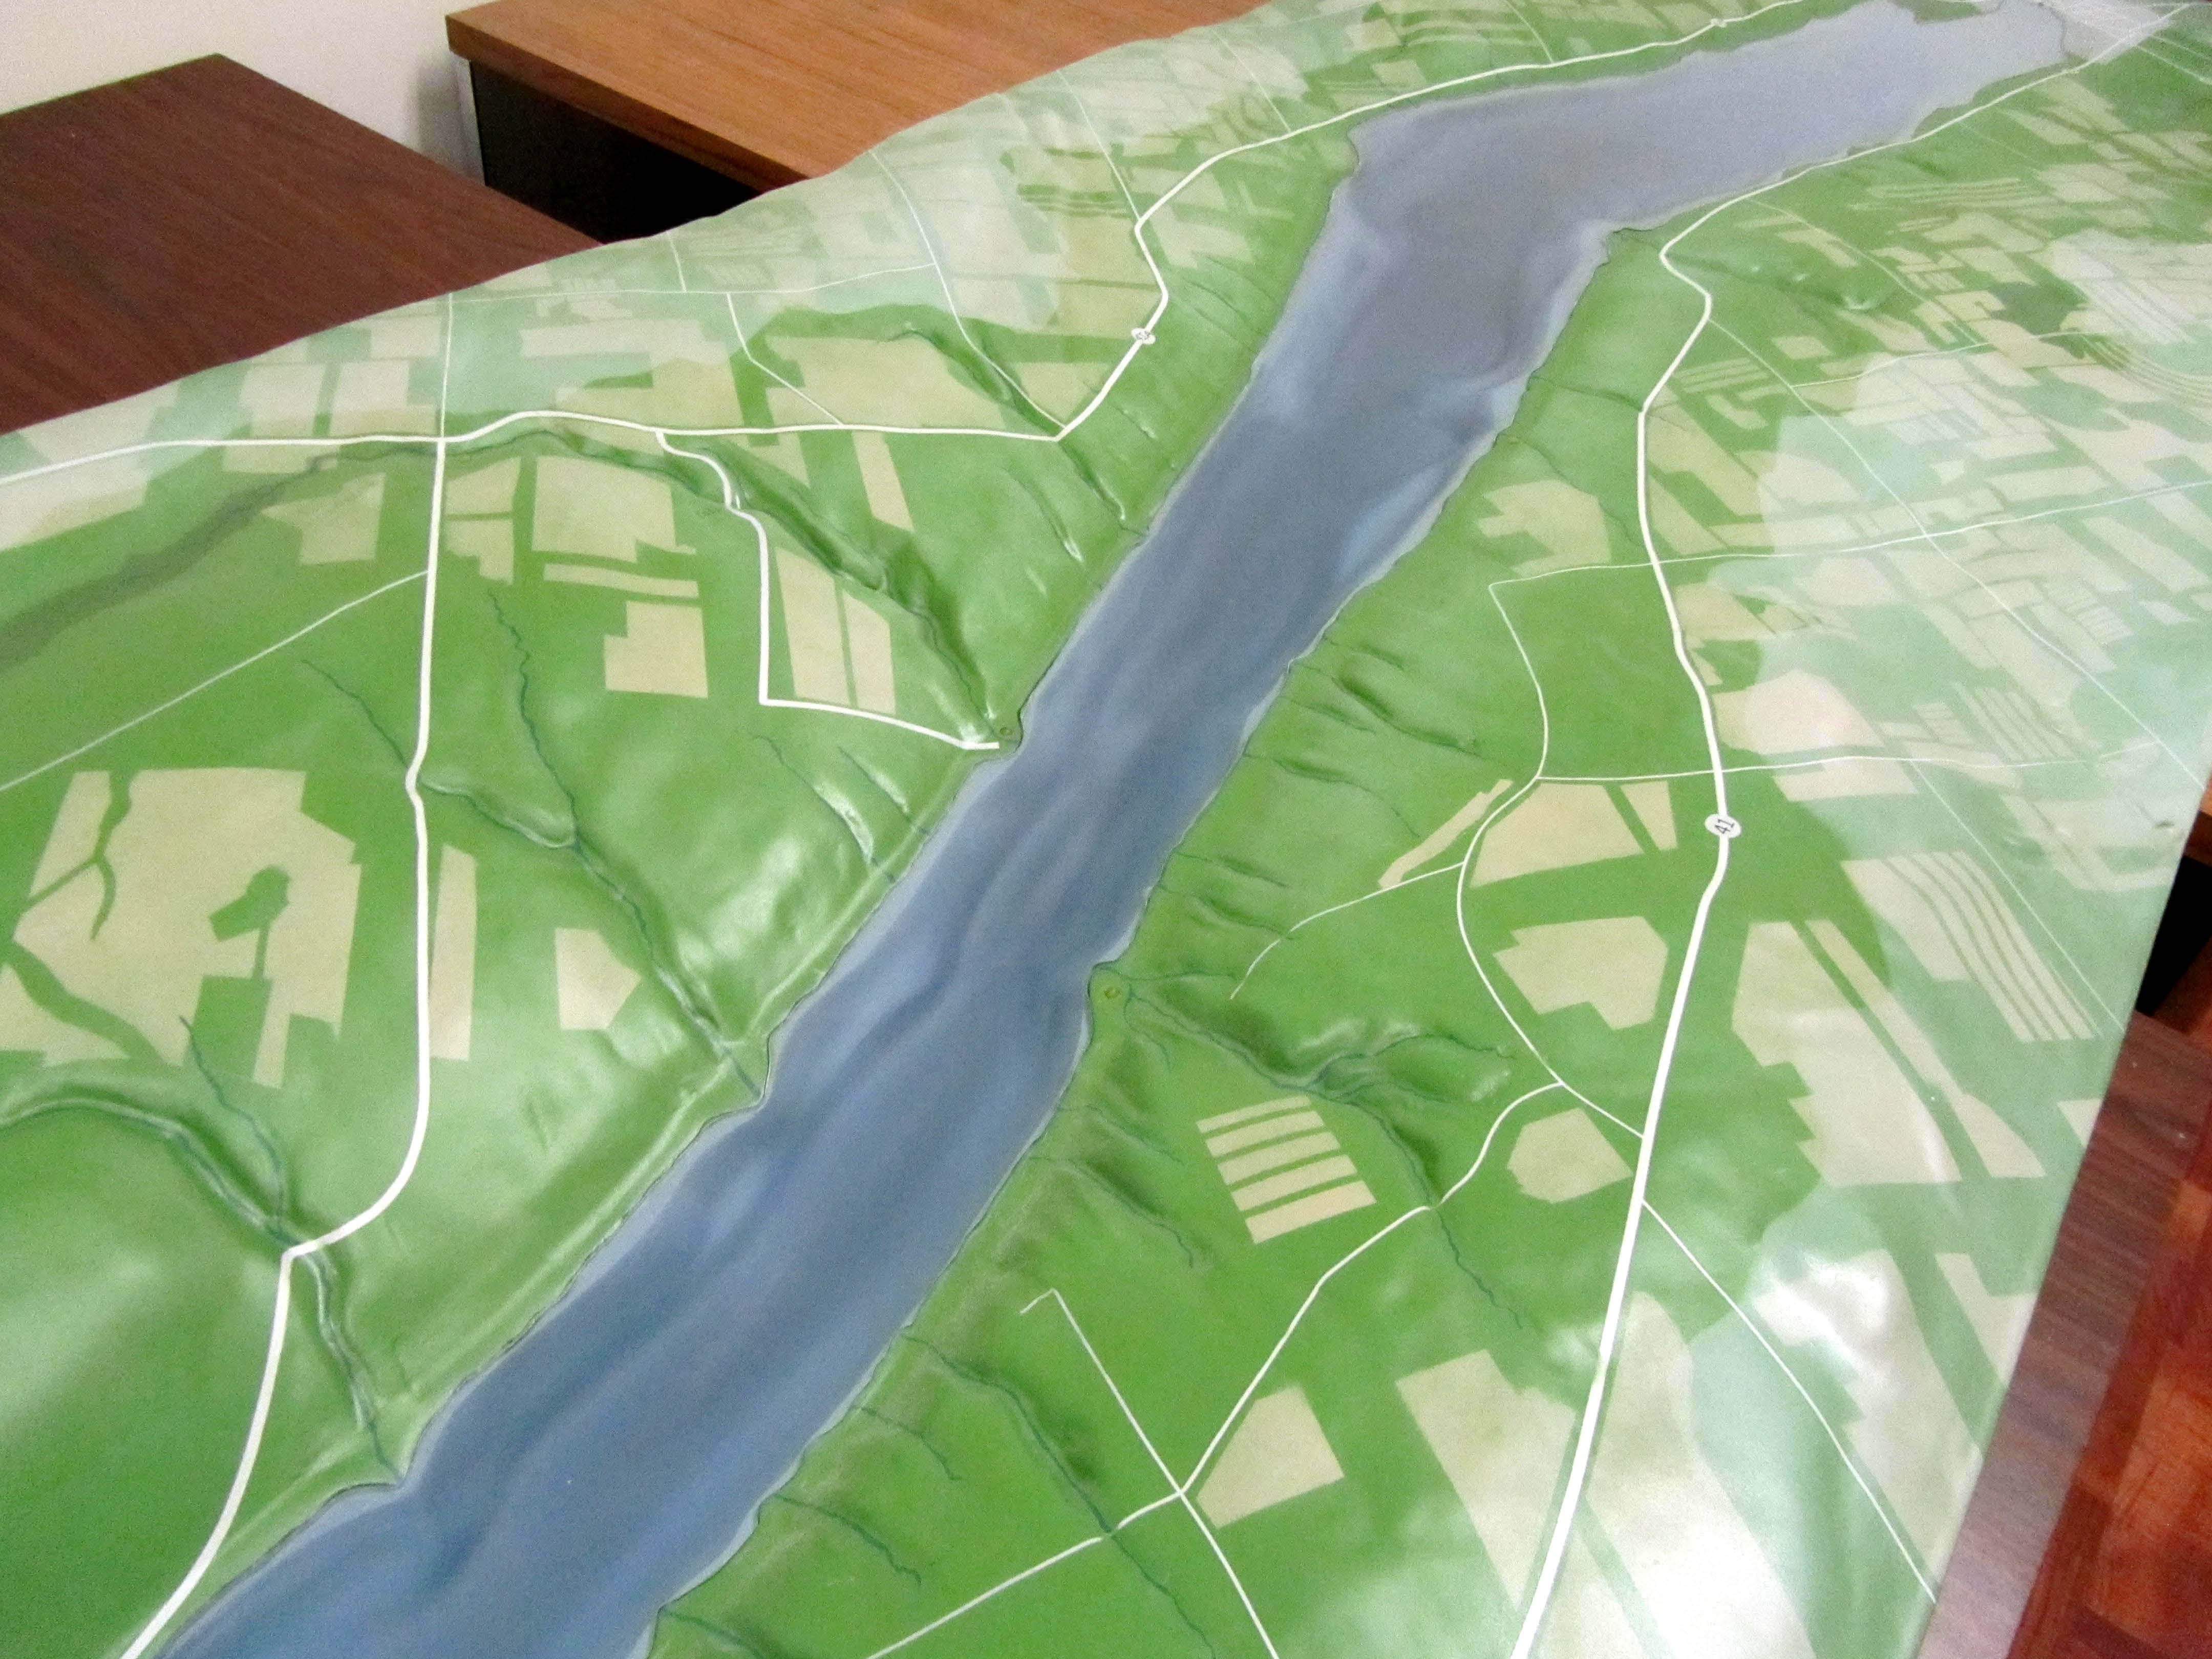 skaneateles lake topography model